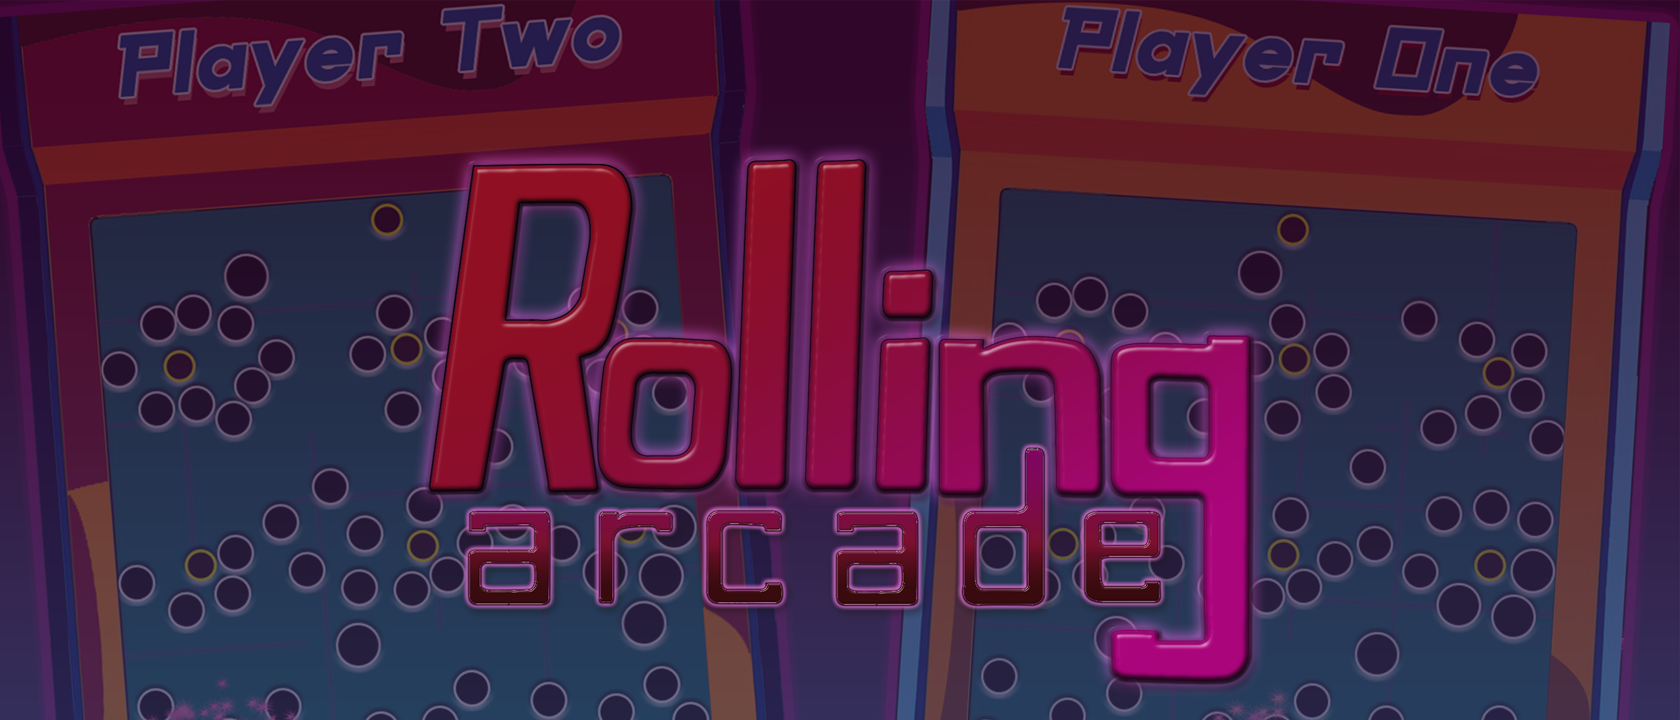 Rolling Arcade